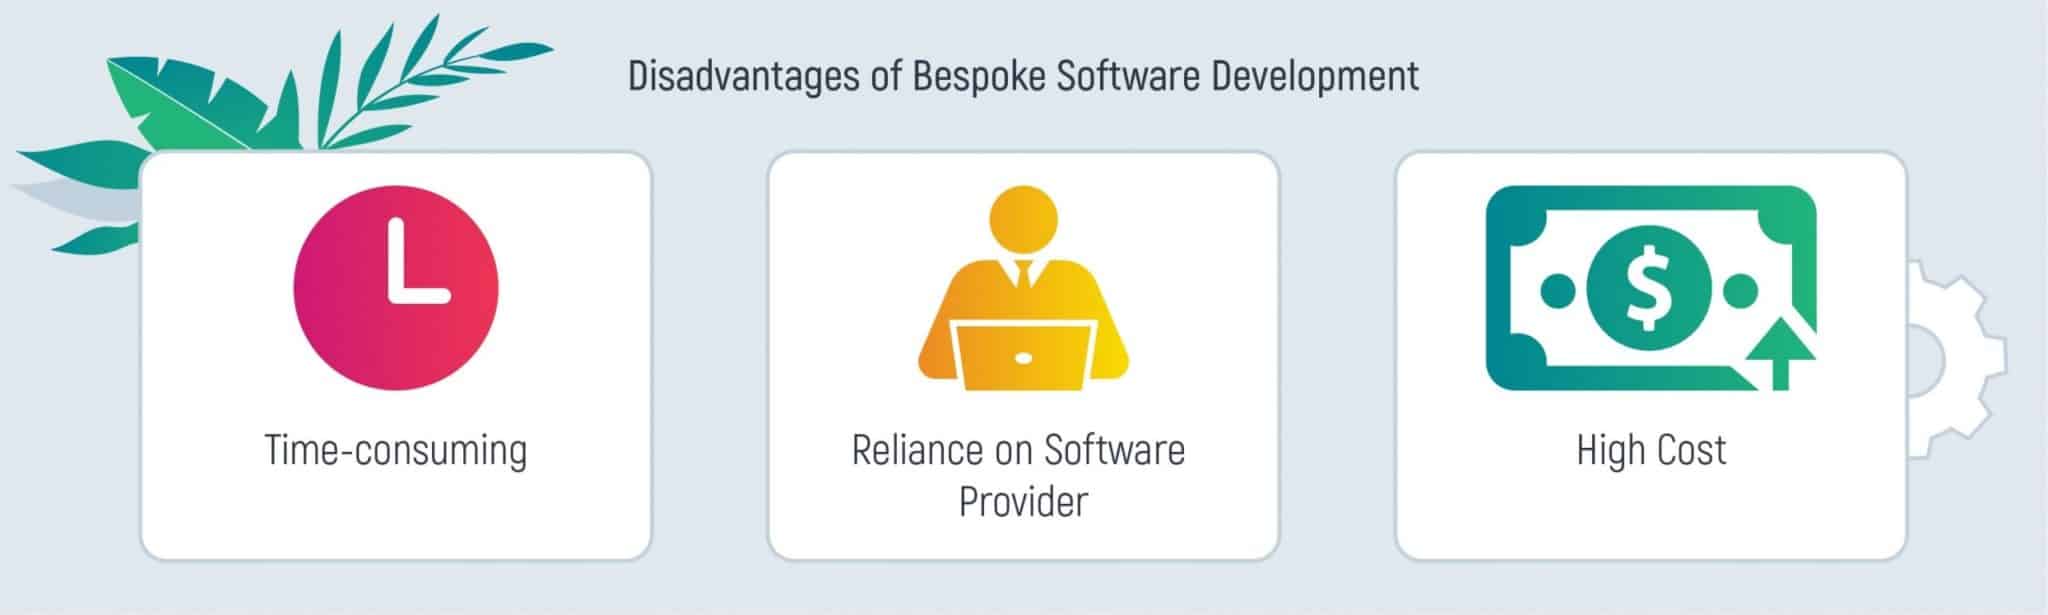 Main Advantages and Disadvantages of Bespoke Software Development